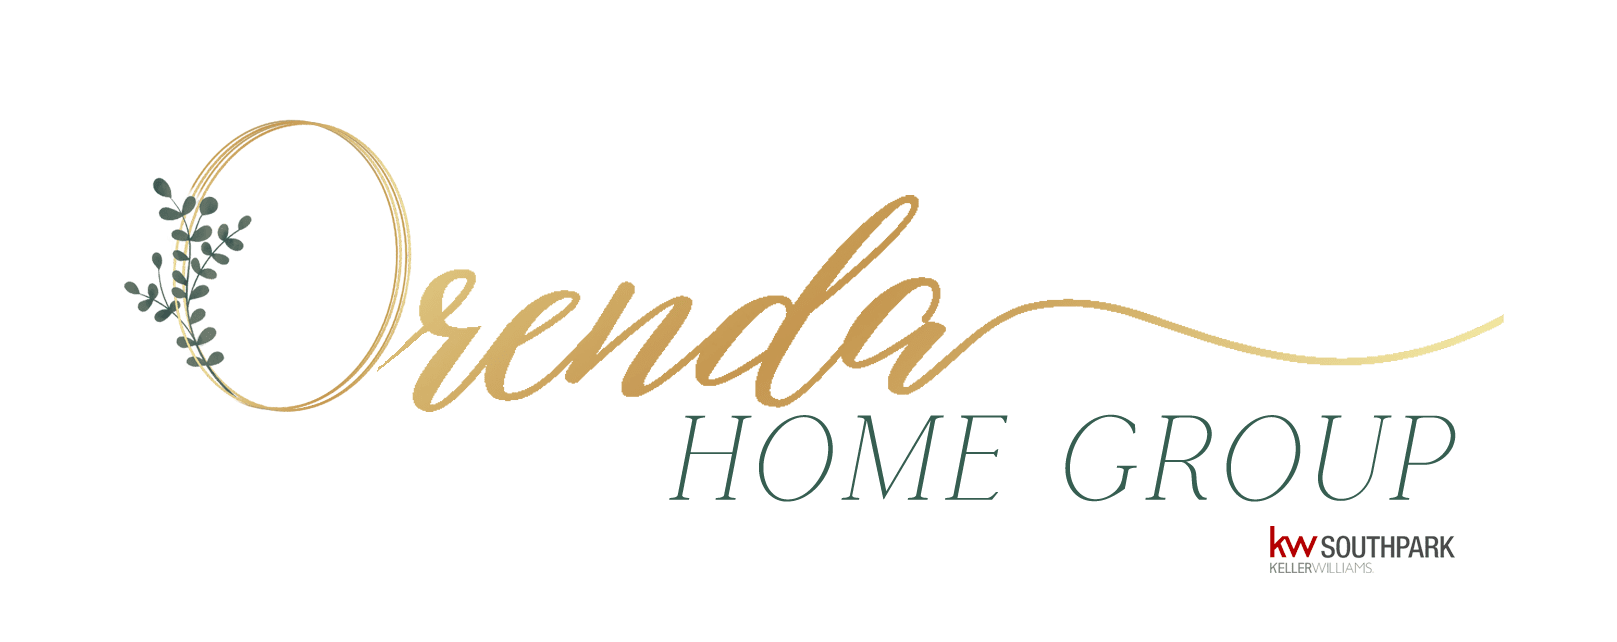 Orenda Home Group